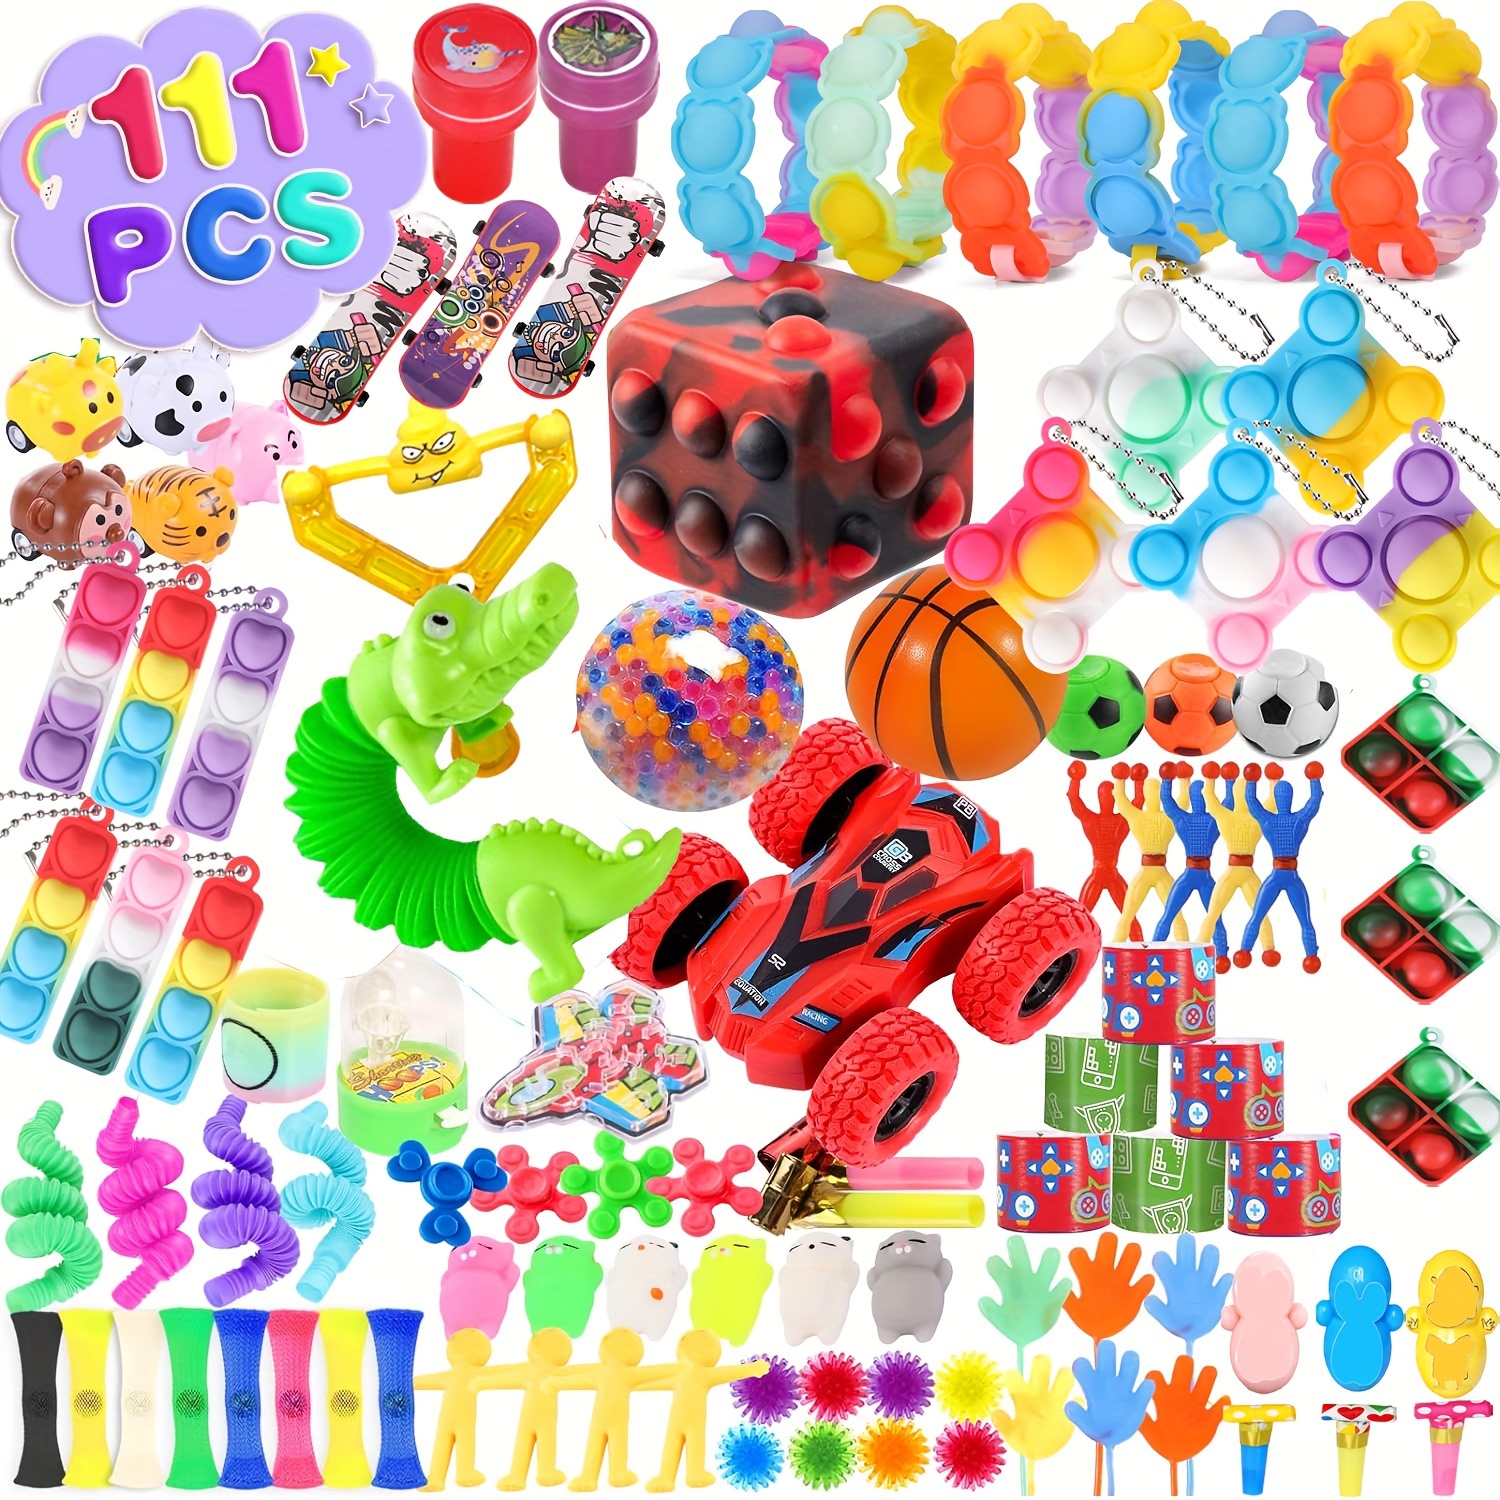 Fidget Toy Packs, Cheap Sensory Toy, 23Pcs Fidget Toy Set for Kids